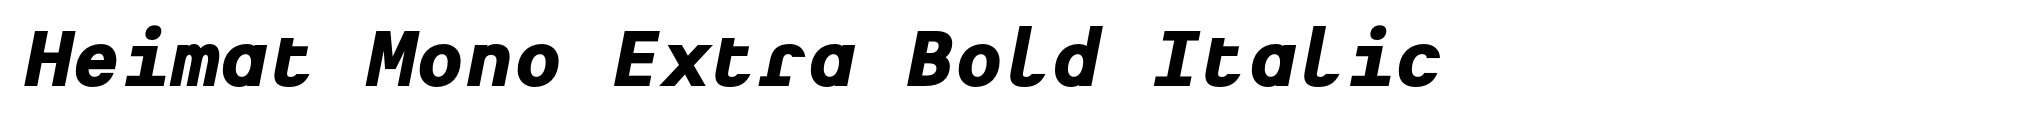 Heimat Mono Extra Bold Italic image